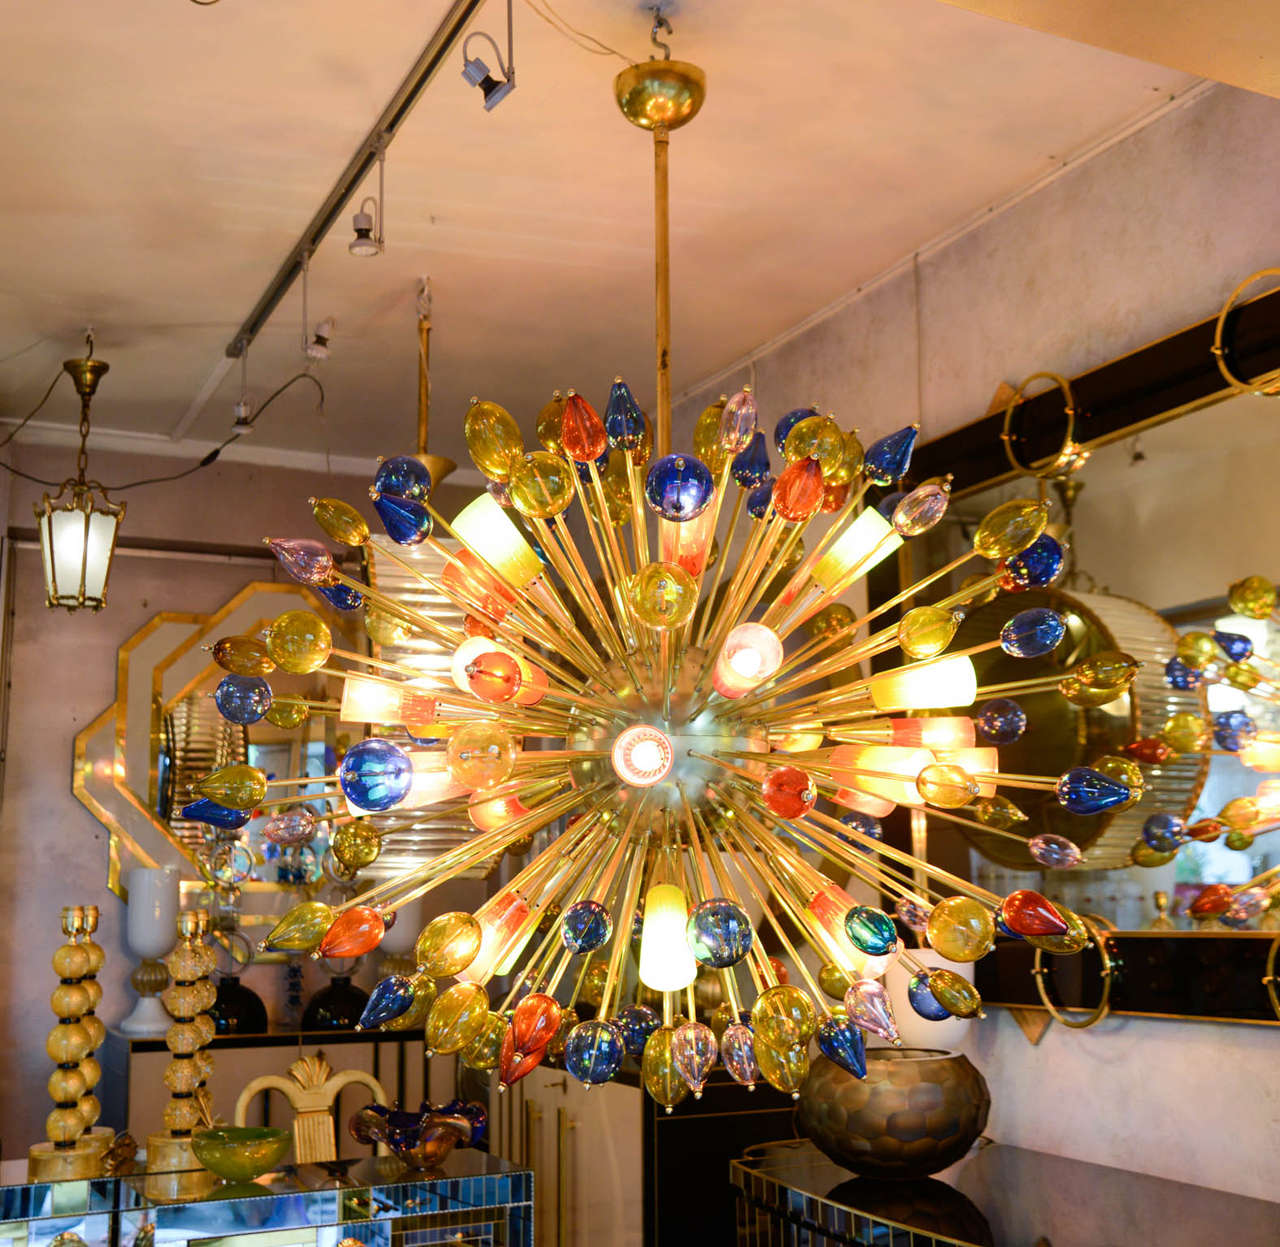 Sparkling chandelier in Murano glass.